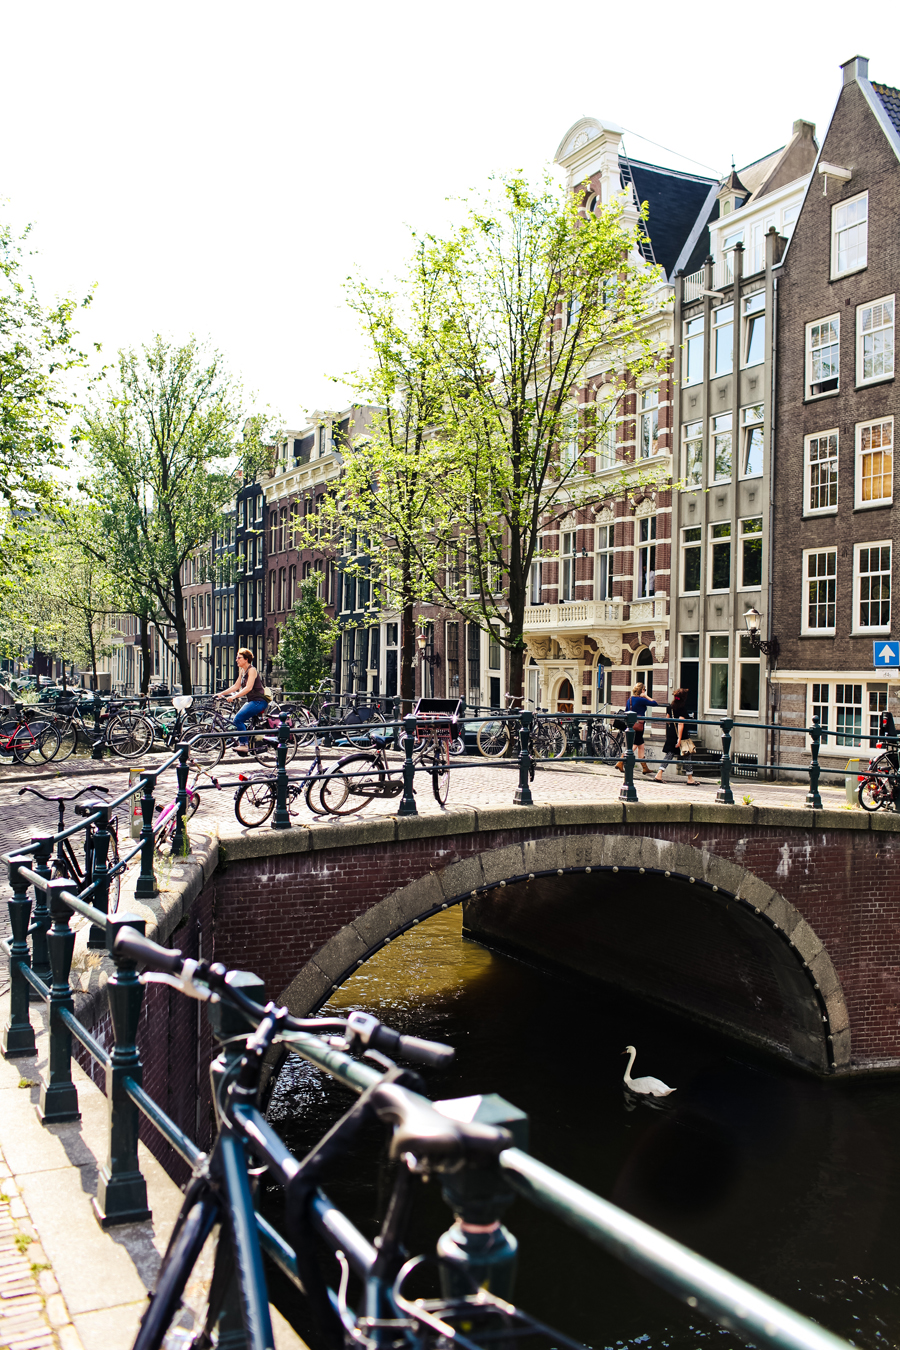 Bikes on the Bridge in Amsterdam